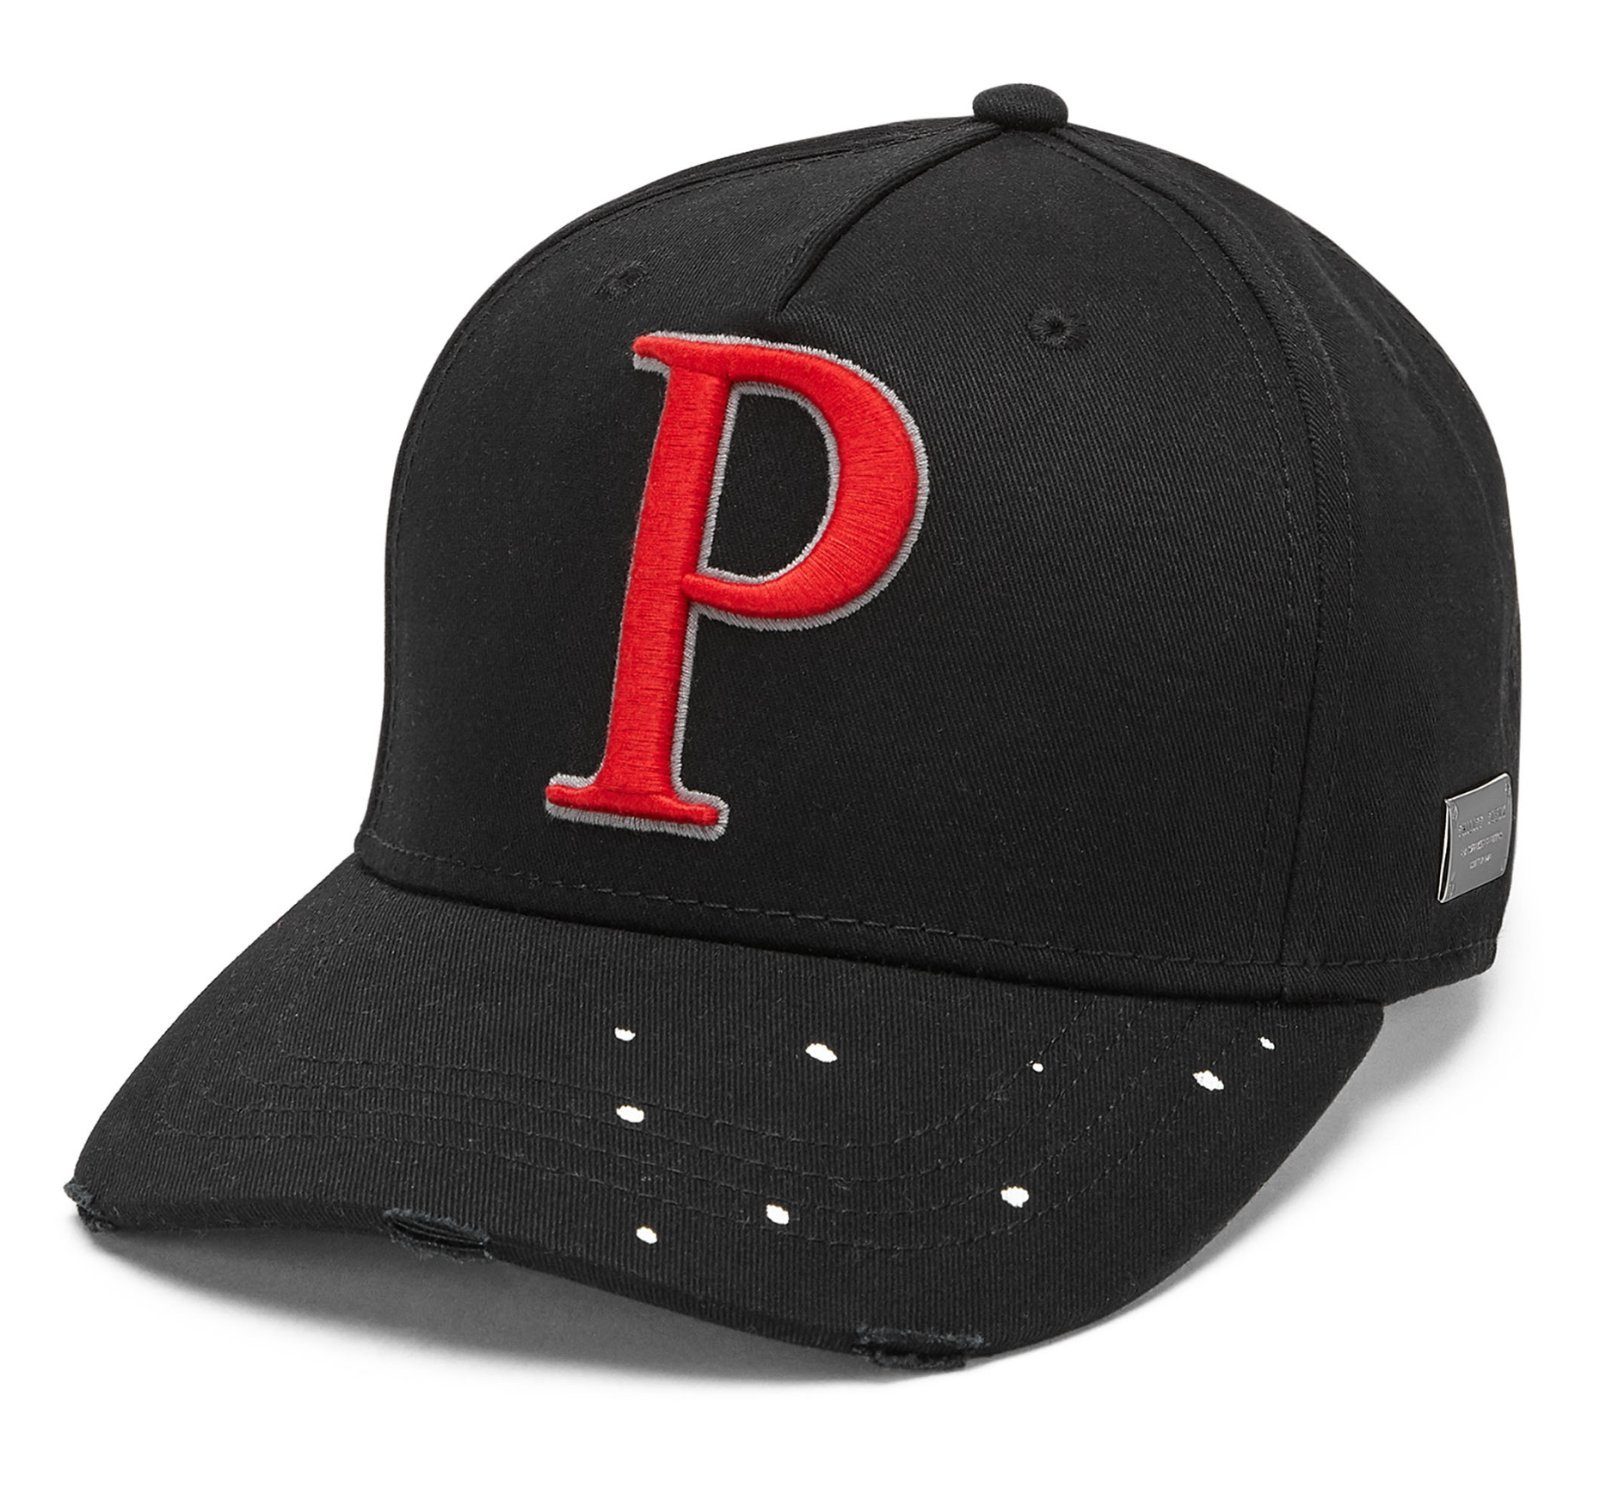 Philipp PHILIPP Paint PLEIN Patch Cap Logo Plein Baseball Baseballcap